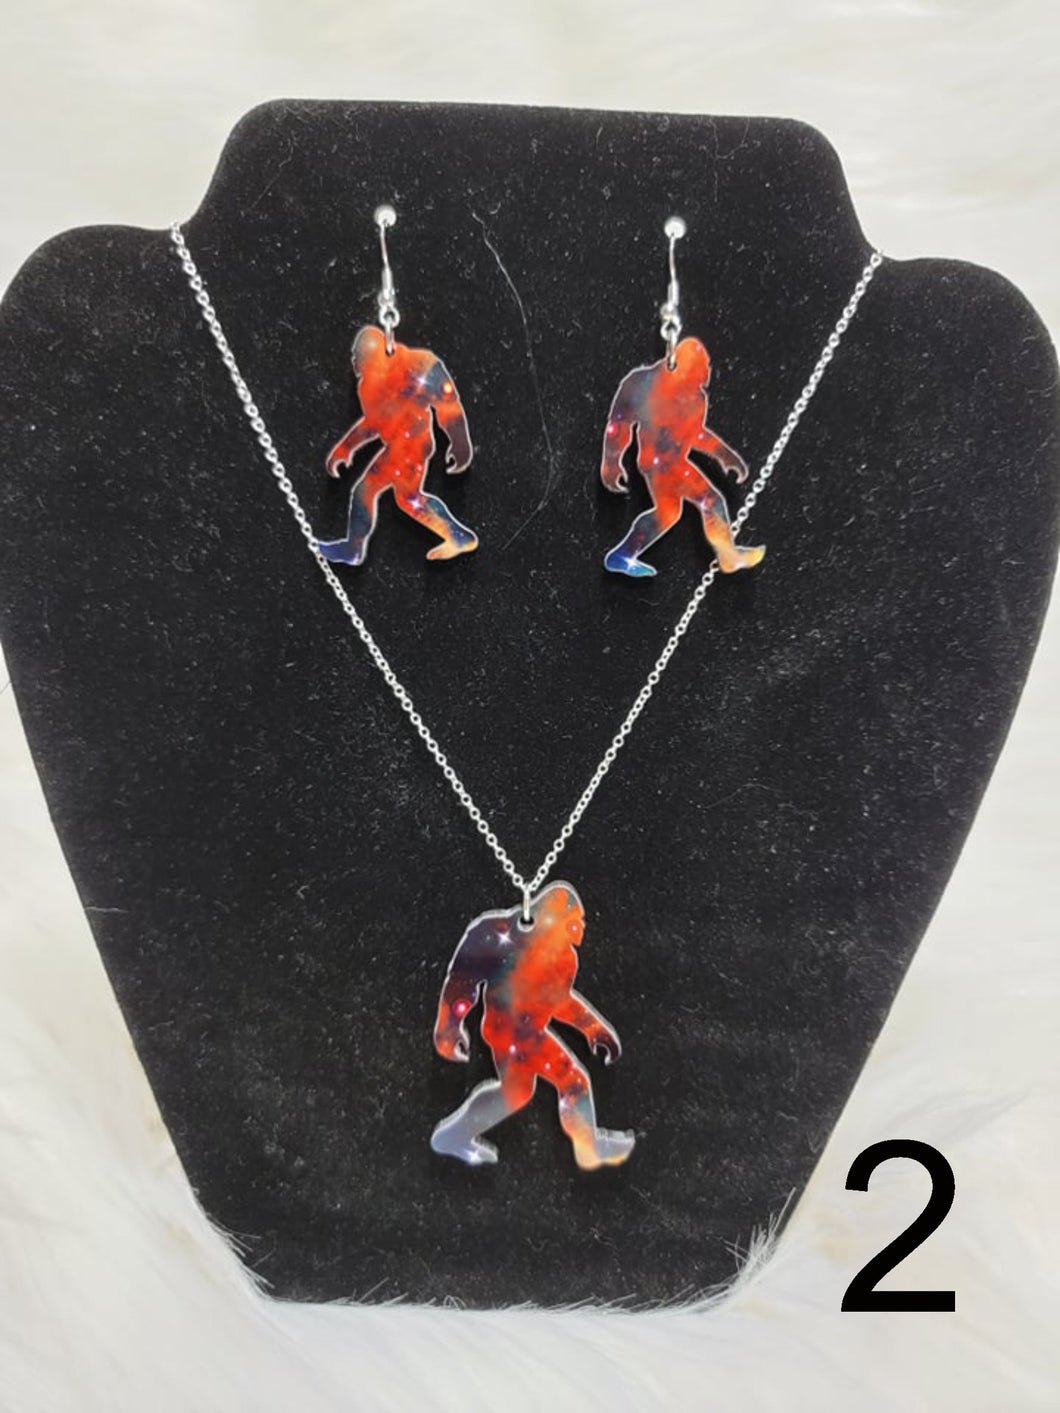 Bigfoot Earrings & Necklace - Each Set is Unique - Colors Vary